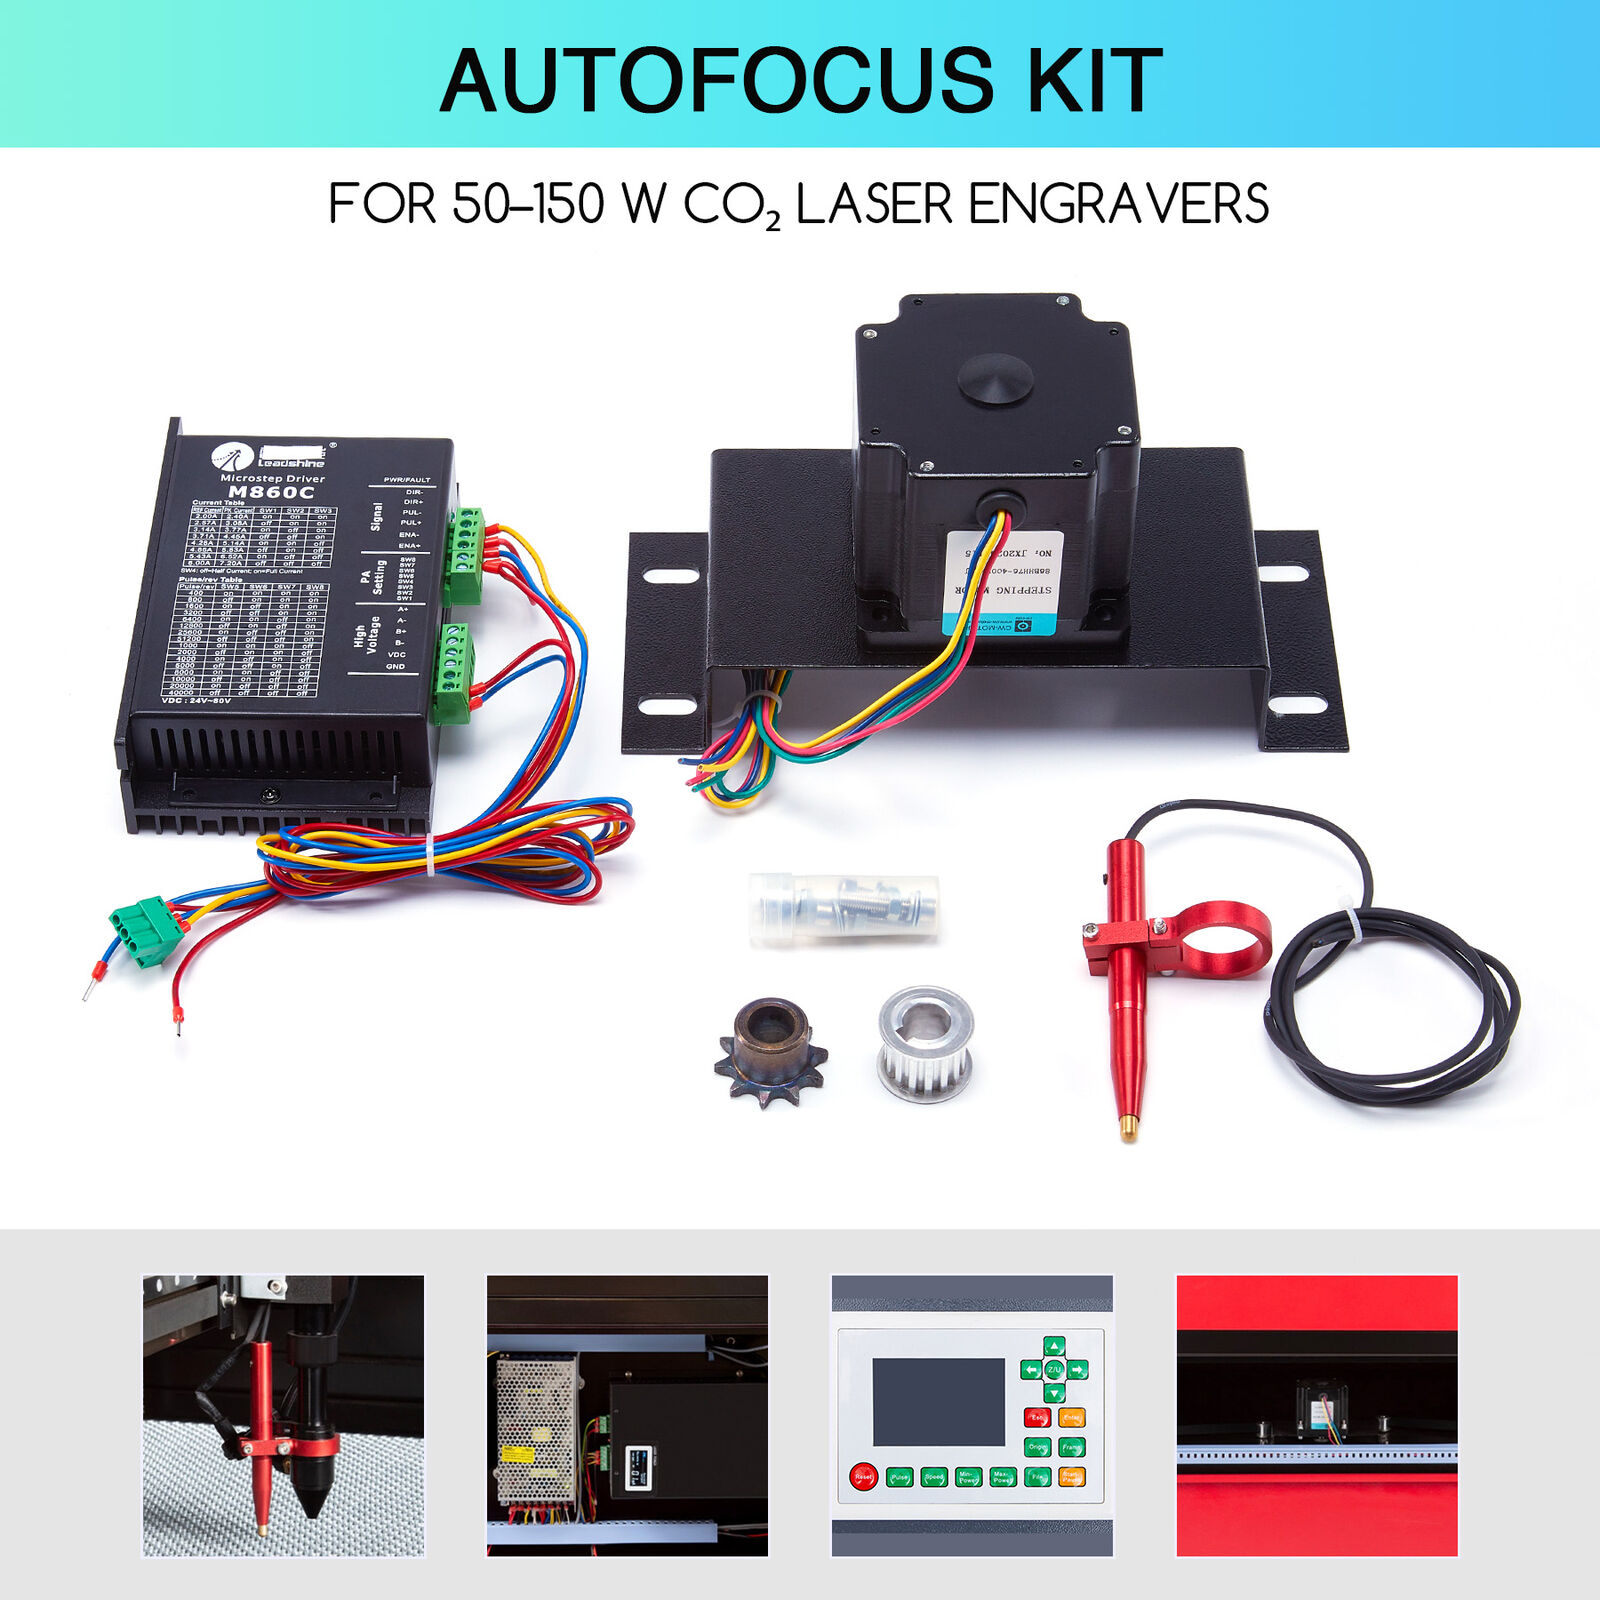 OMTech Autofocus Kit for 50W 60W 80W 100W CO2 Laser Engraver Motorized Workbed